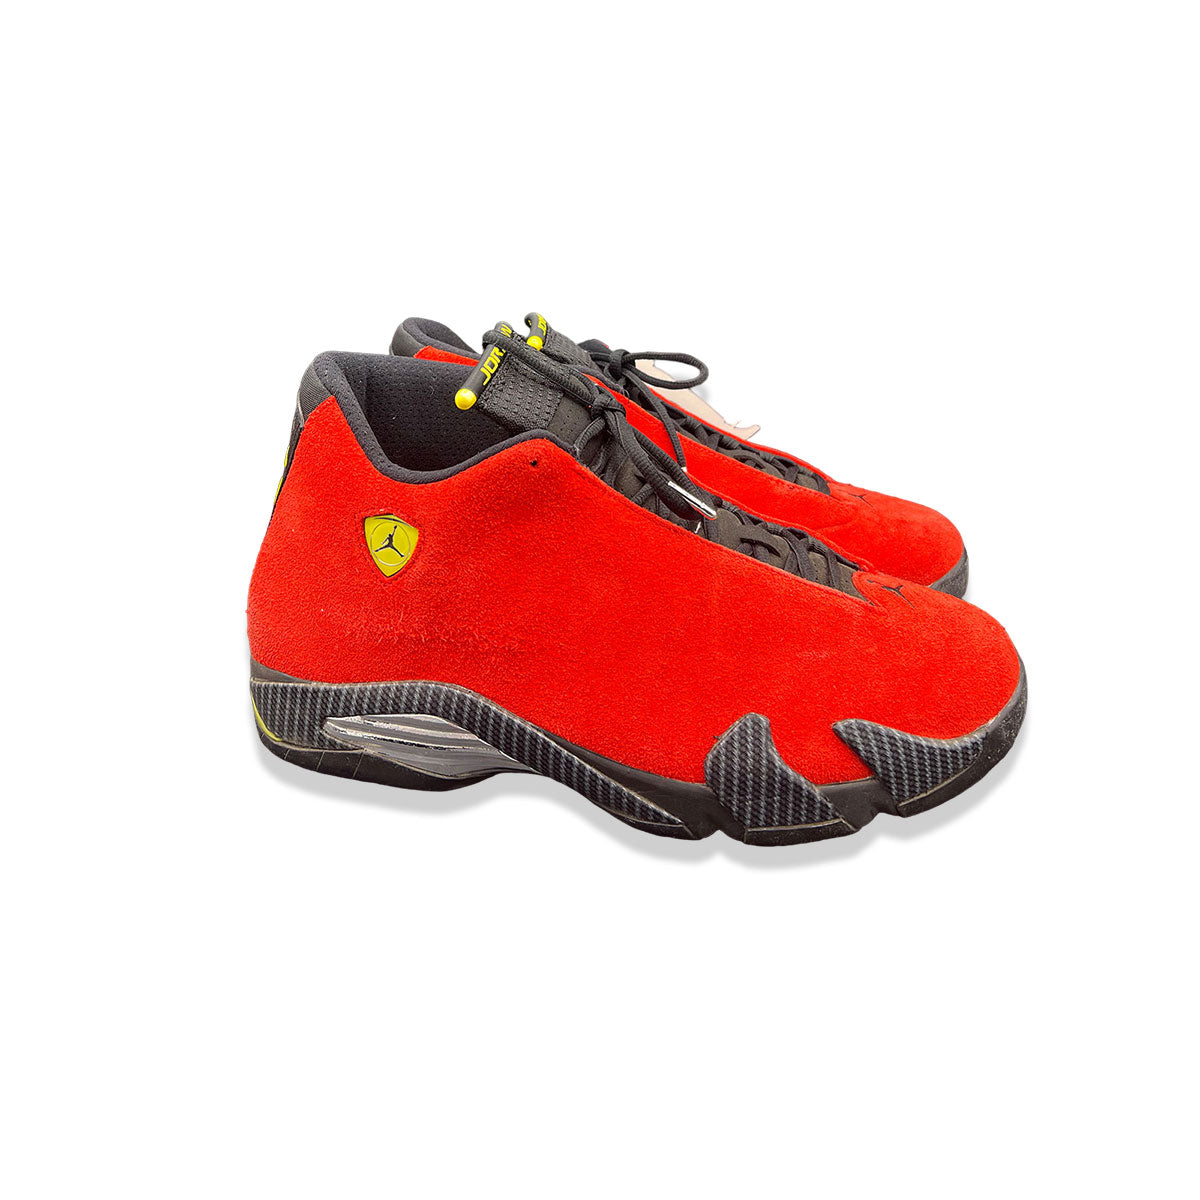 Air Jordan 14 Retro 'Ferrari' Challenge Red Size 13 (Pre-Owned)